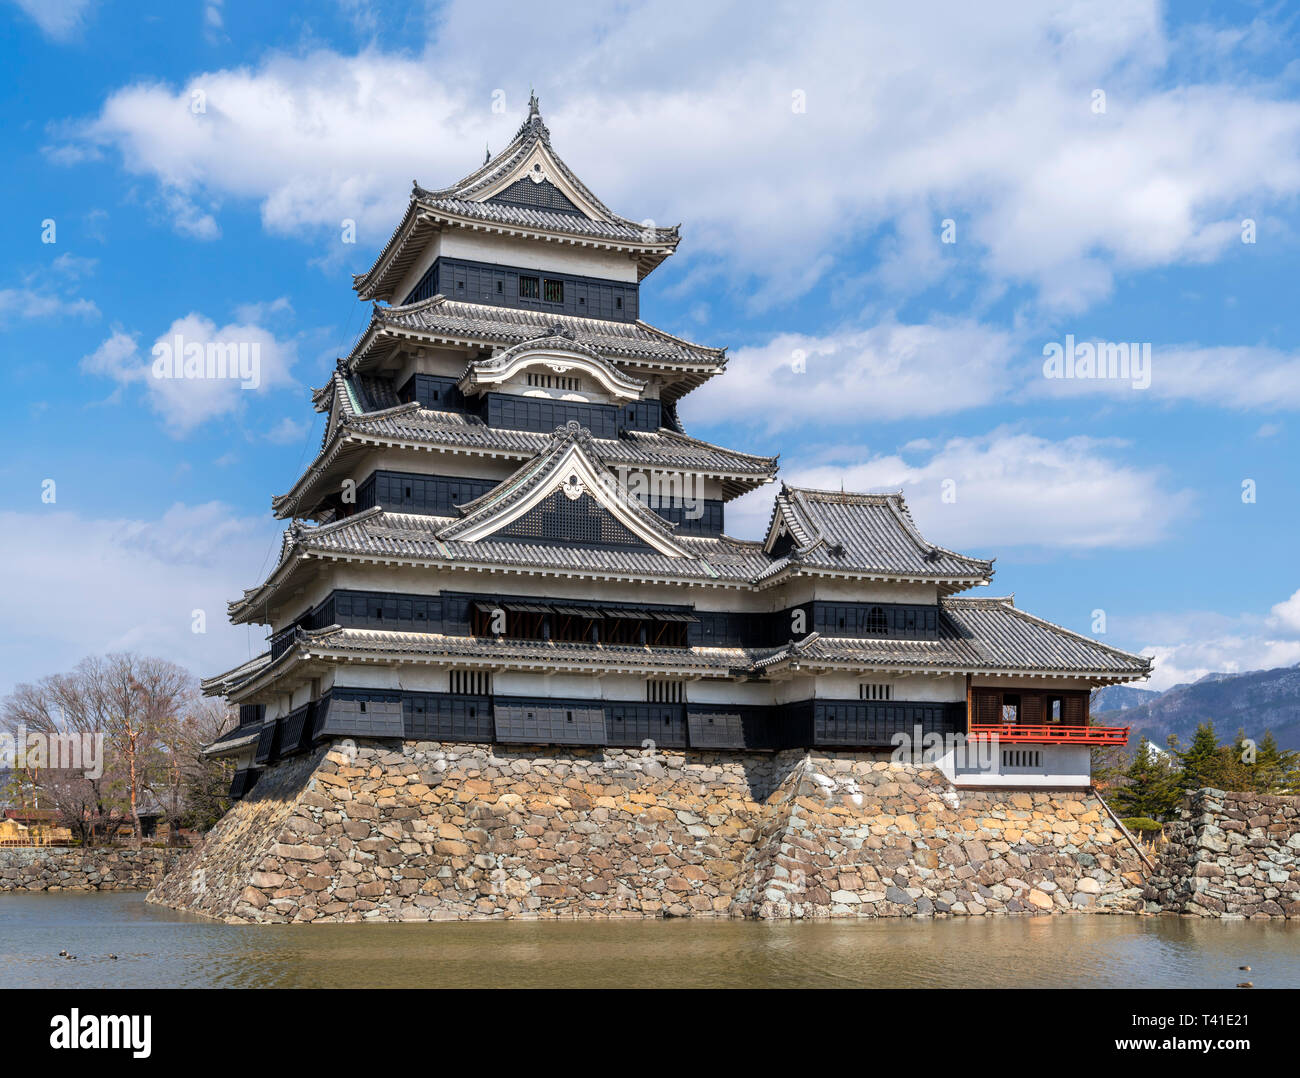 The Keep of Matsumoto Castle, Matsumoto, Japan Stock Photo